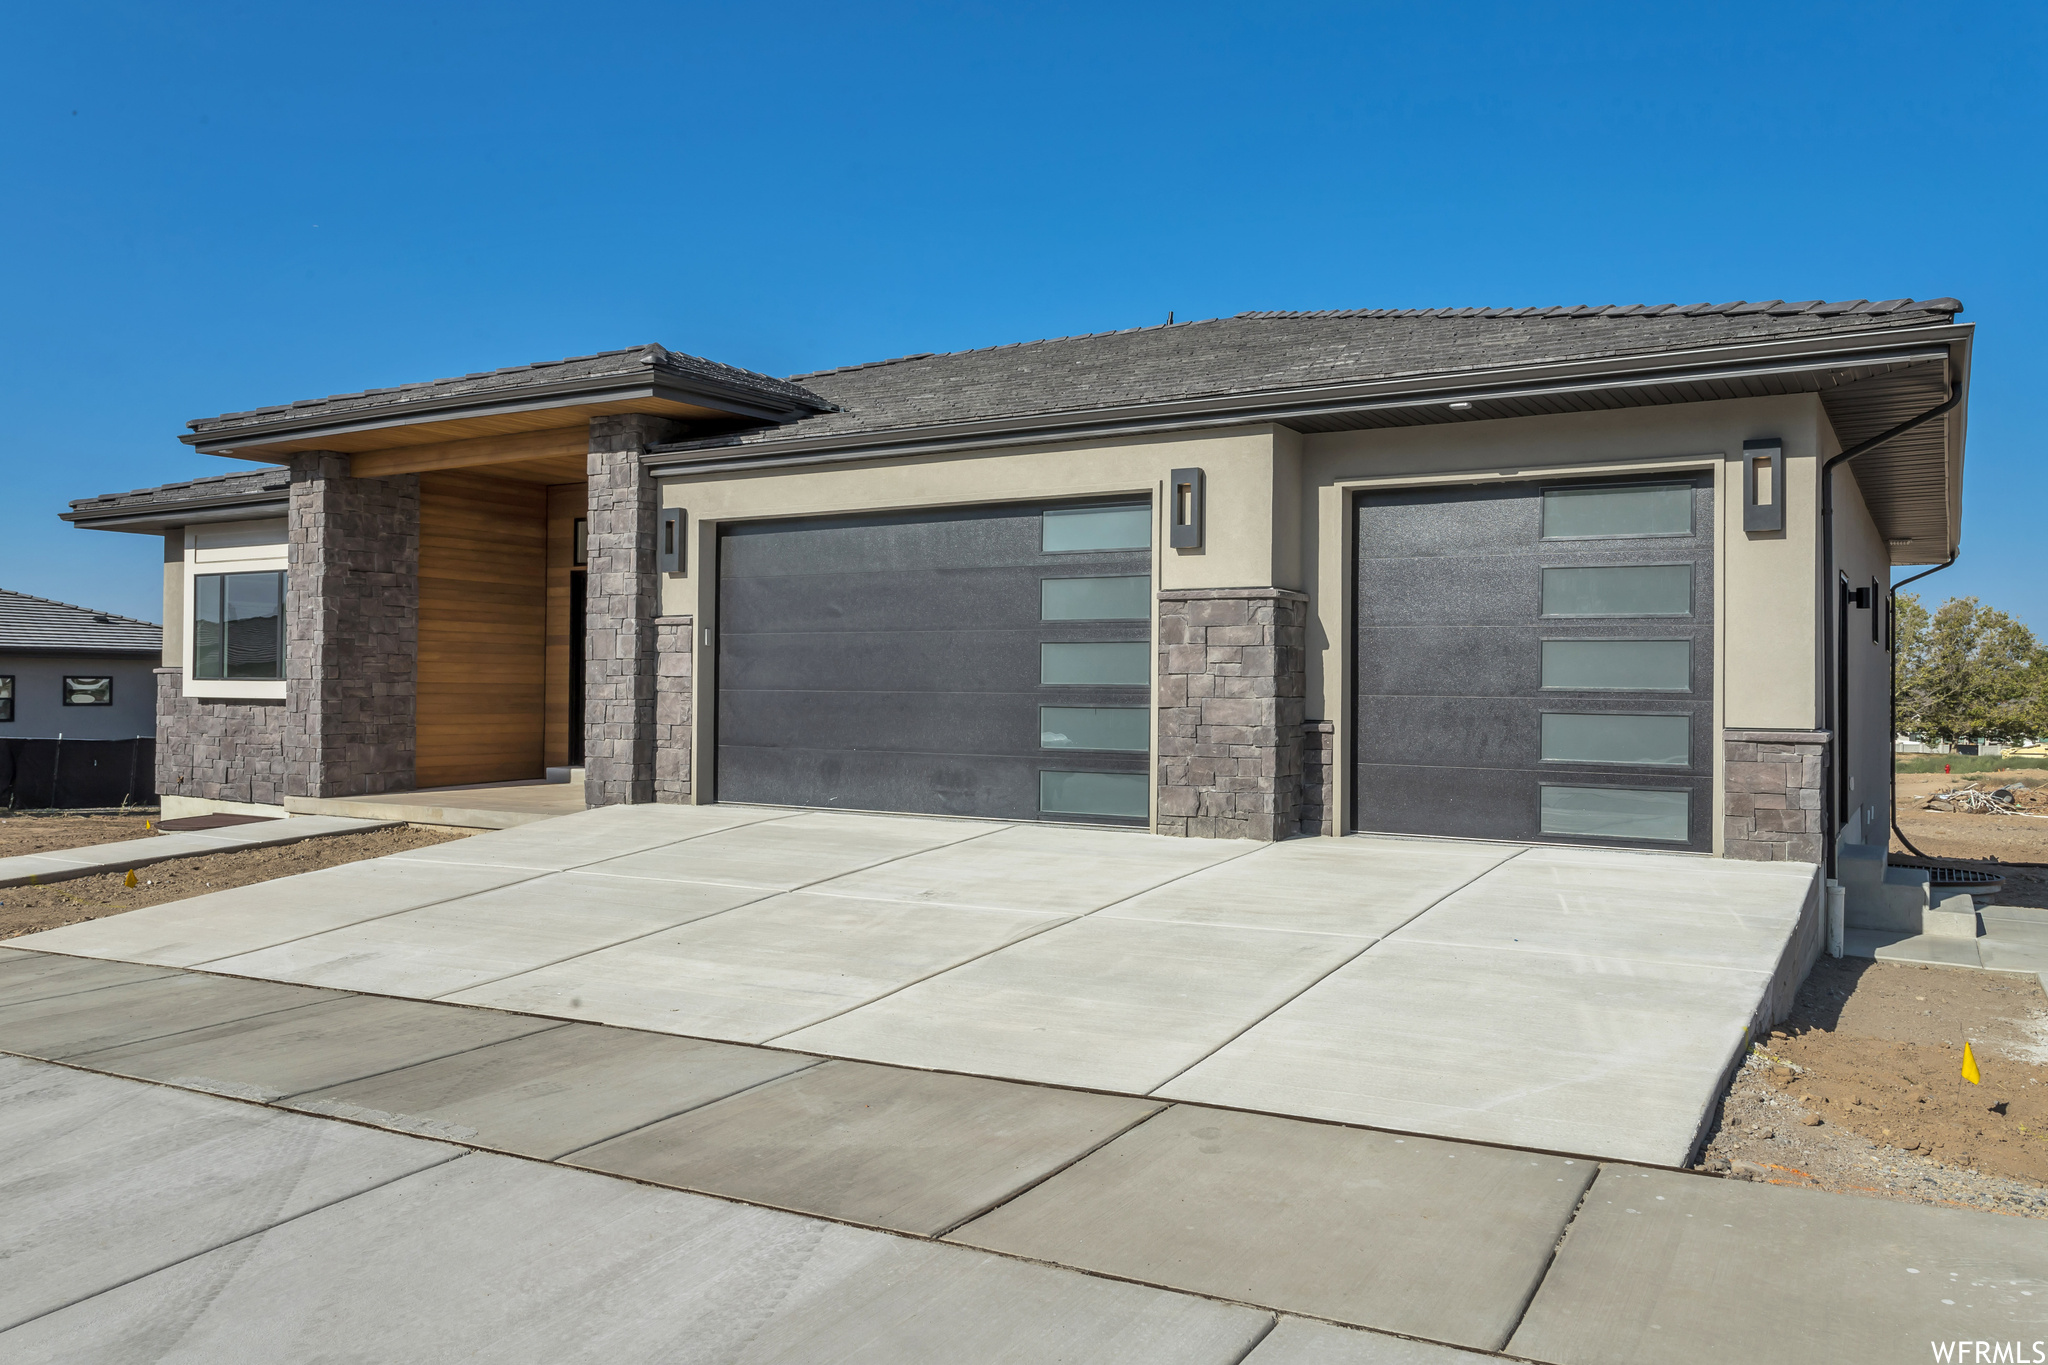 The modern prairie style exterior style unites the community